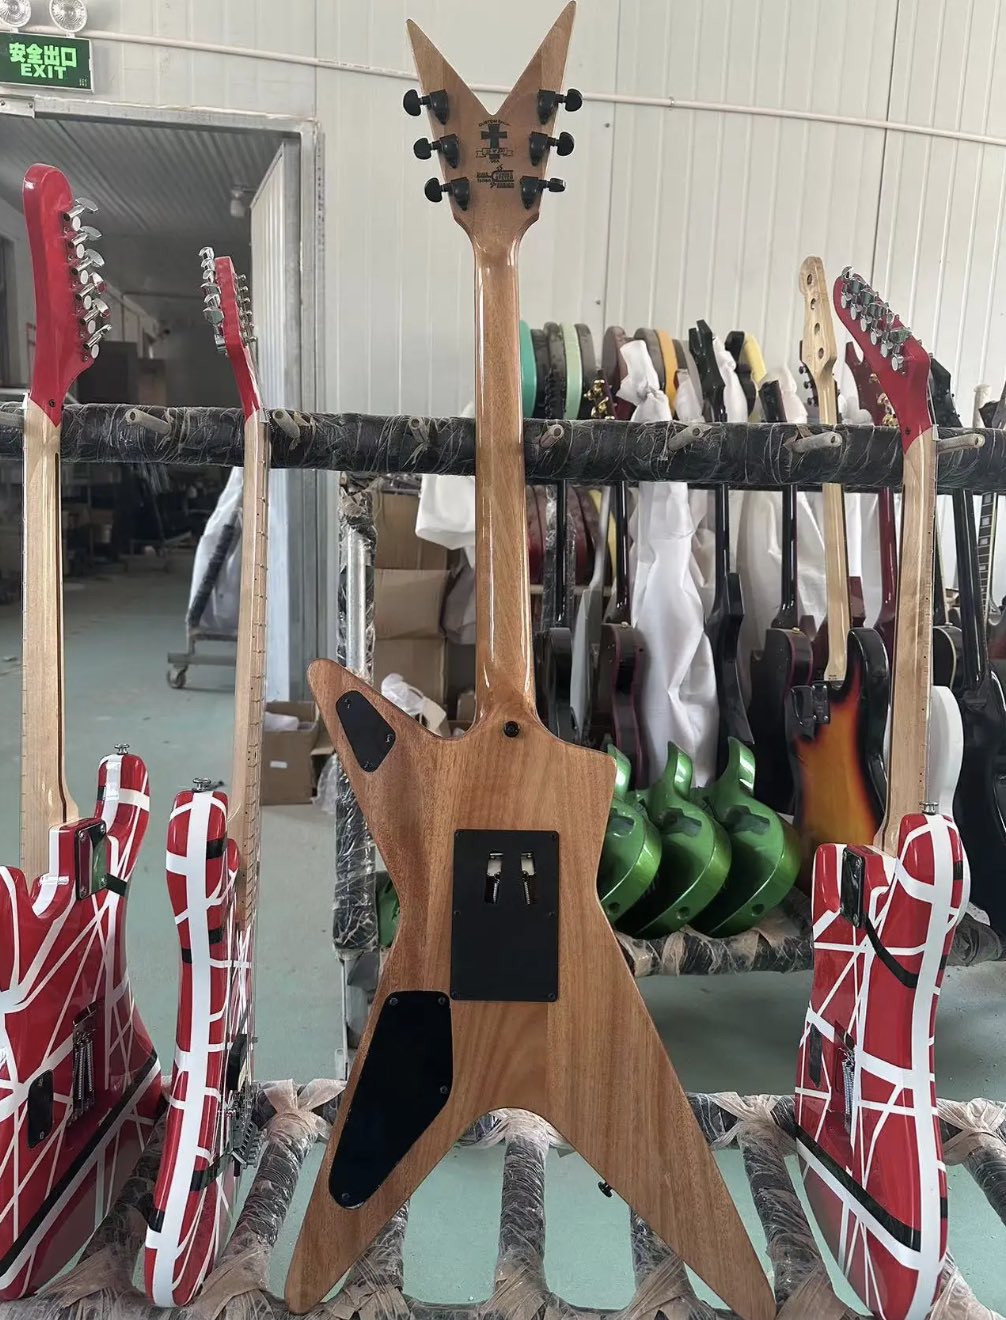 Custom Flamed Maple Top Dime Bag Dean Dimebag Darrell Electric Guitar Rose wood fingerboard in natural color, available in stock